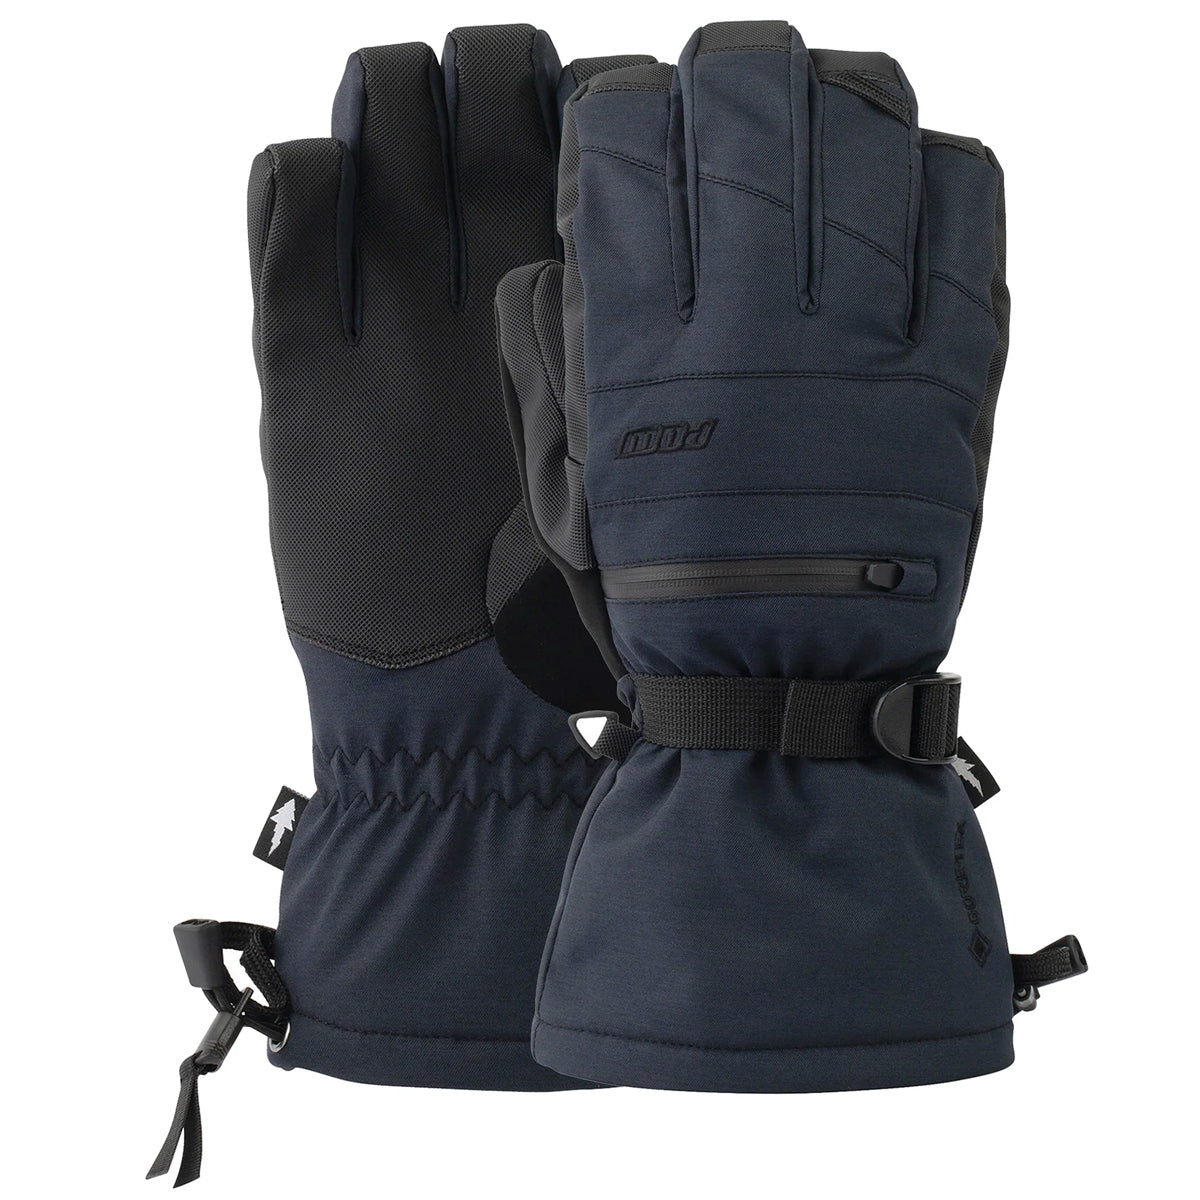 POW Wayback GTX Long Glove Warm Snowboard Gloves - Black image 1